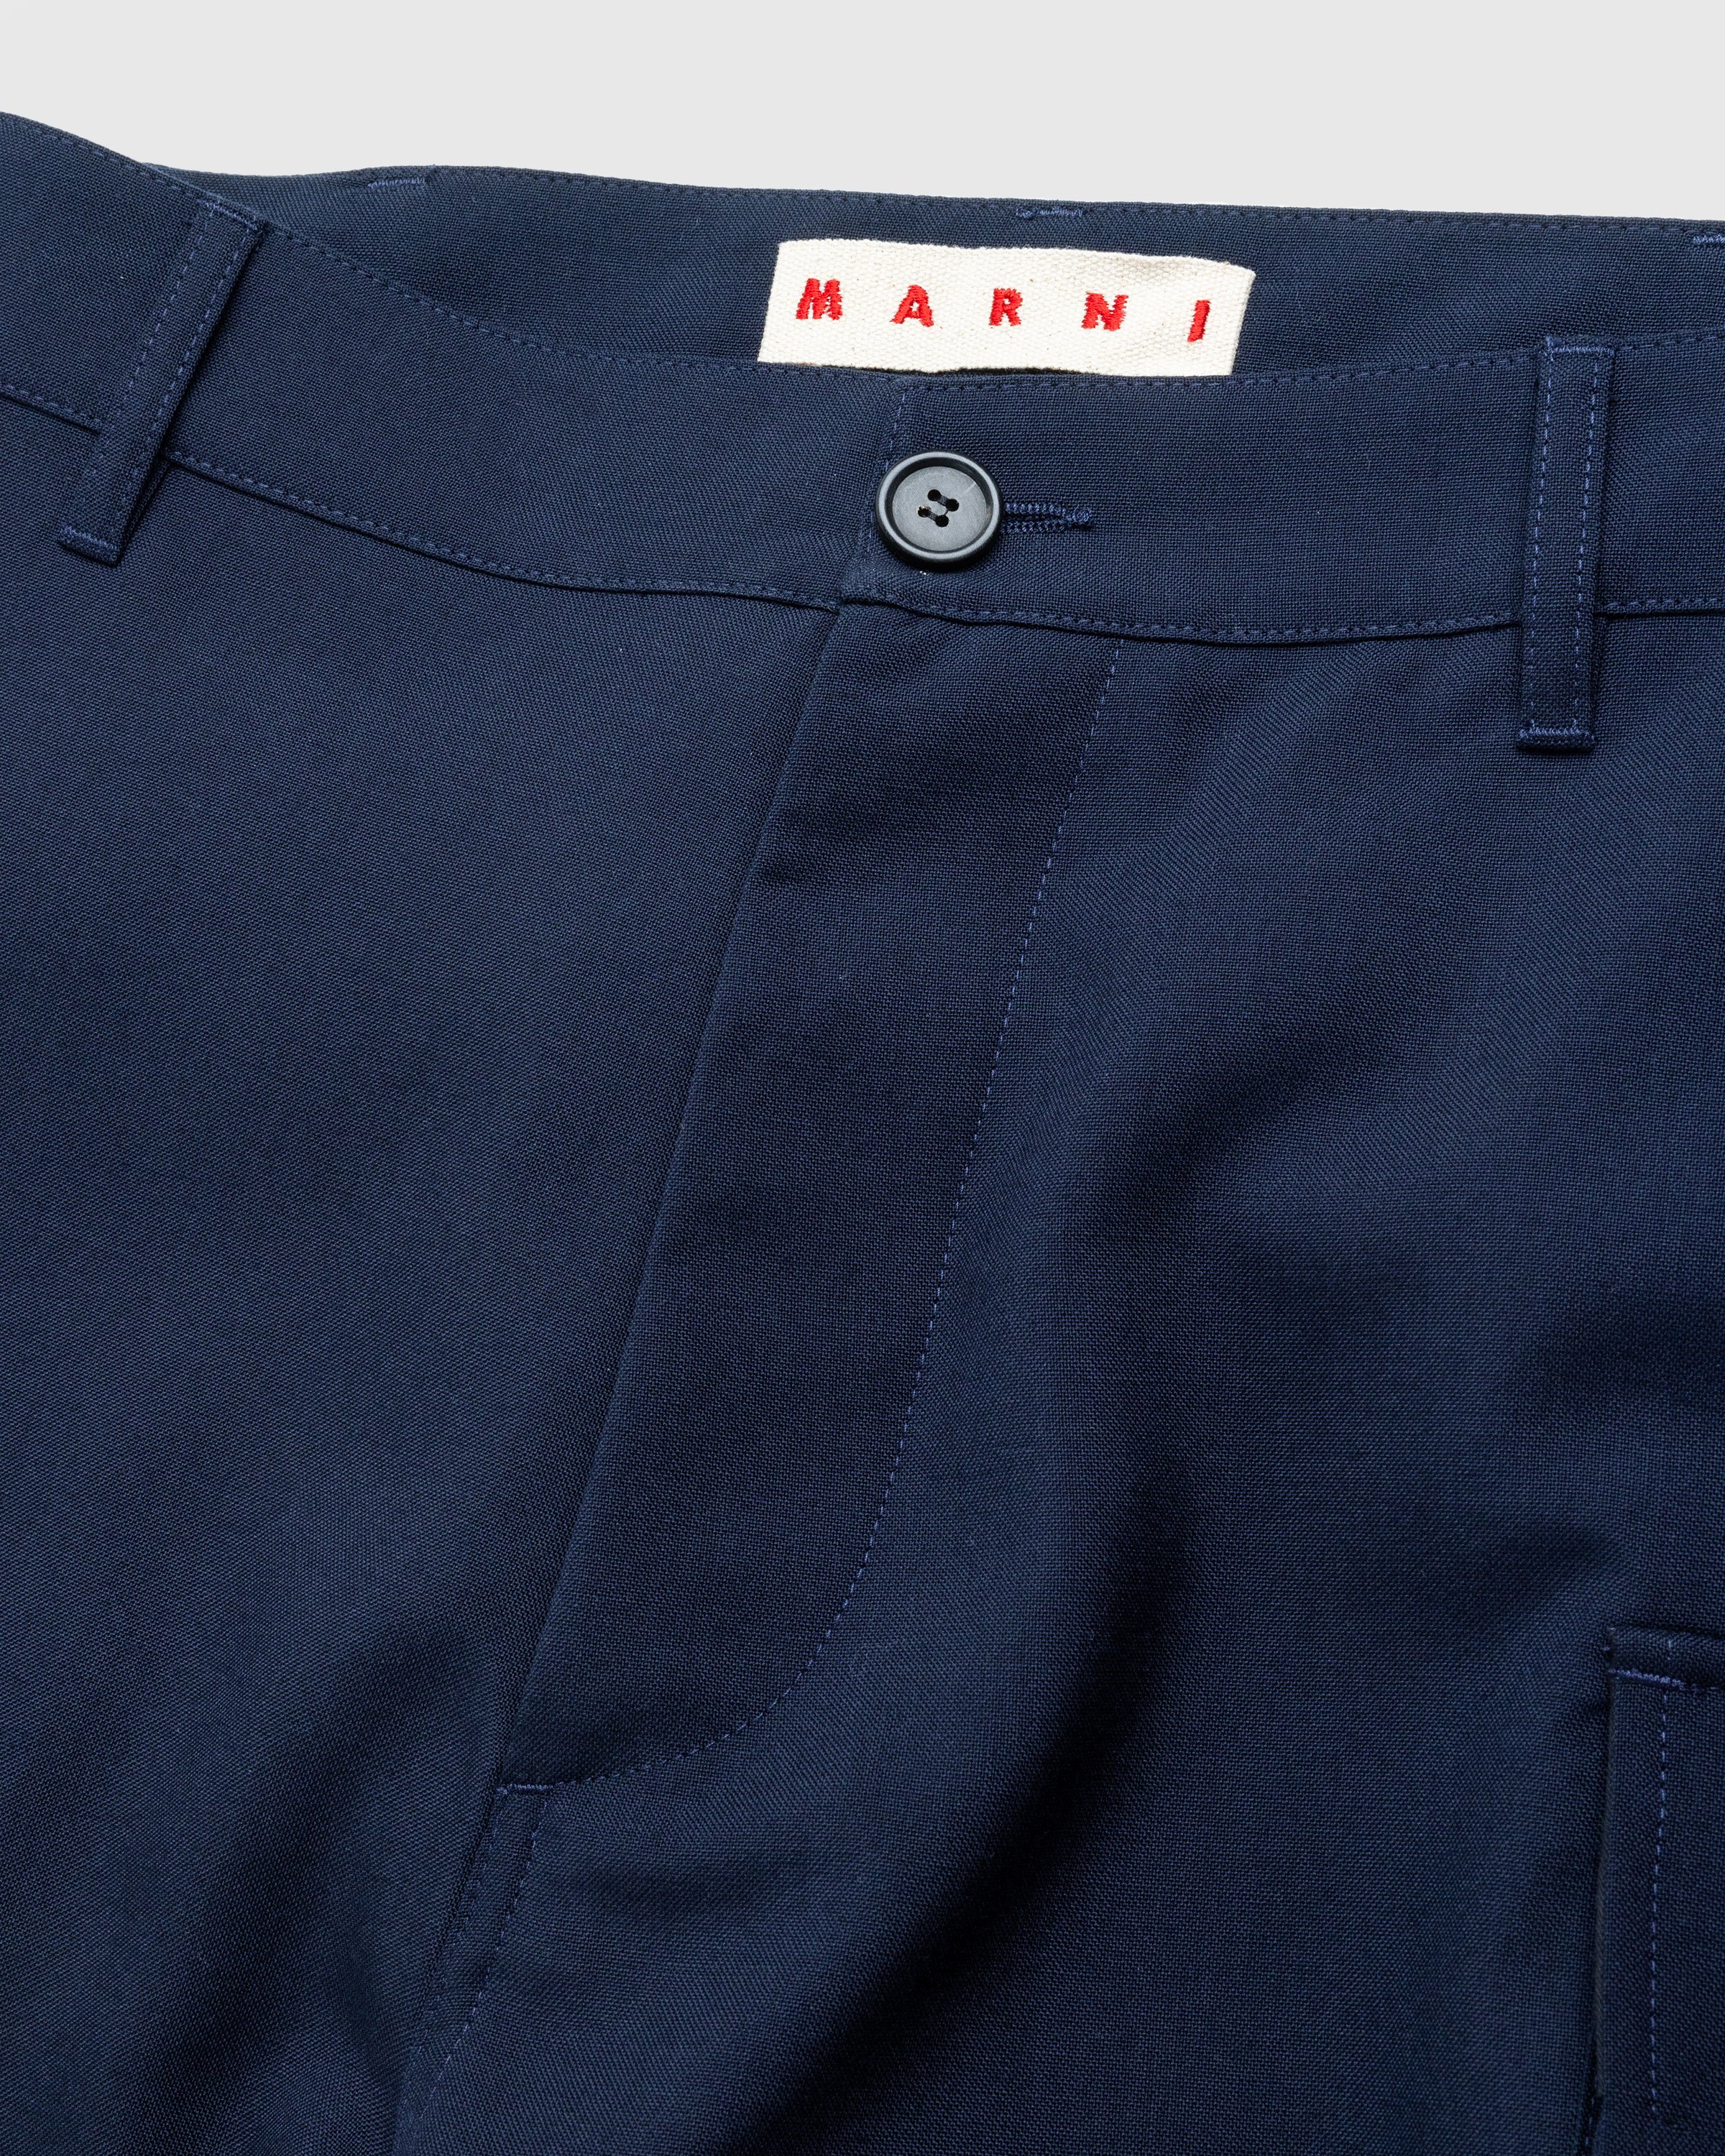 Marni - Trousers Blue - Clothing - Blue - Image 6